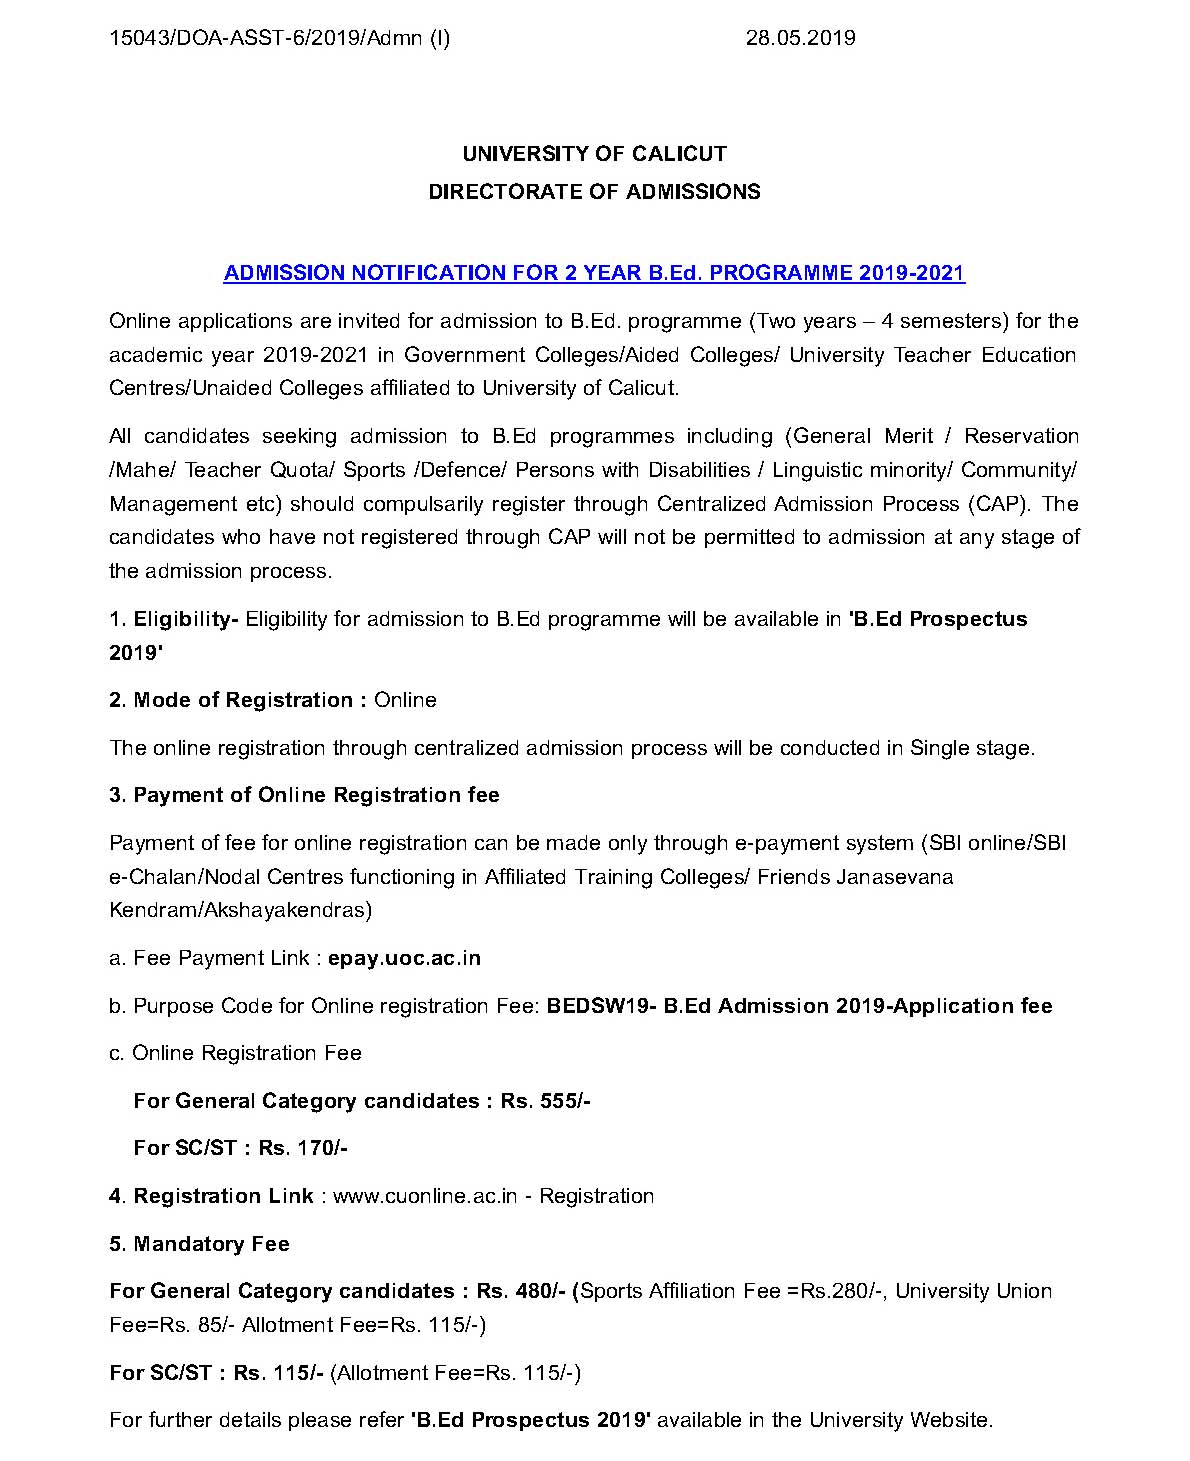 University Of Calicut Admission Notification For B Ed 2019 2021 - Notification Image 1